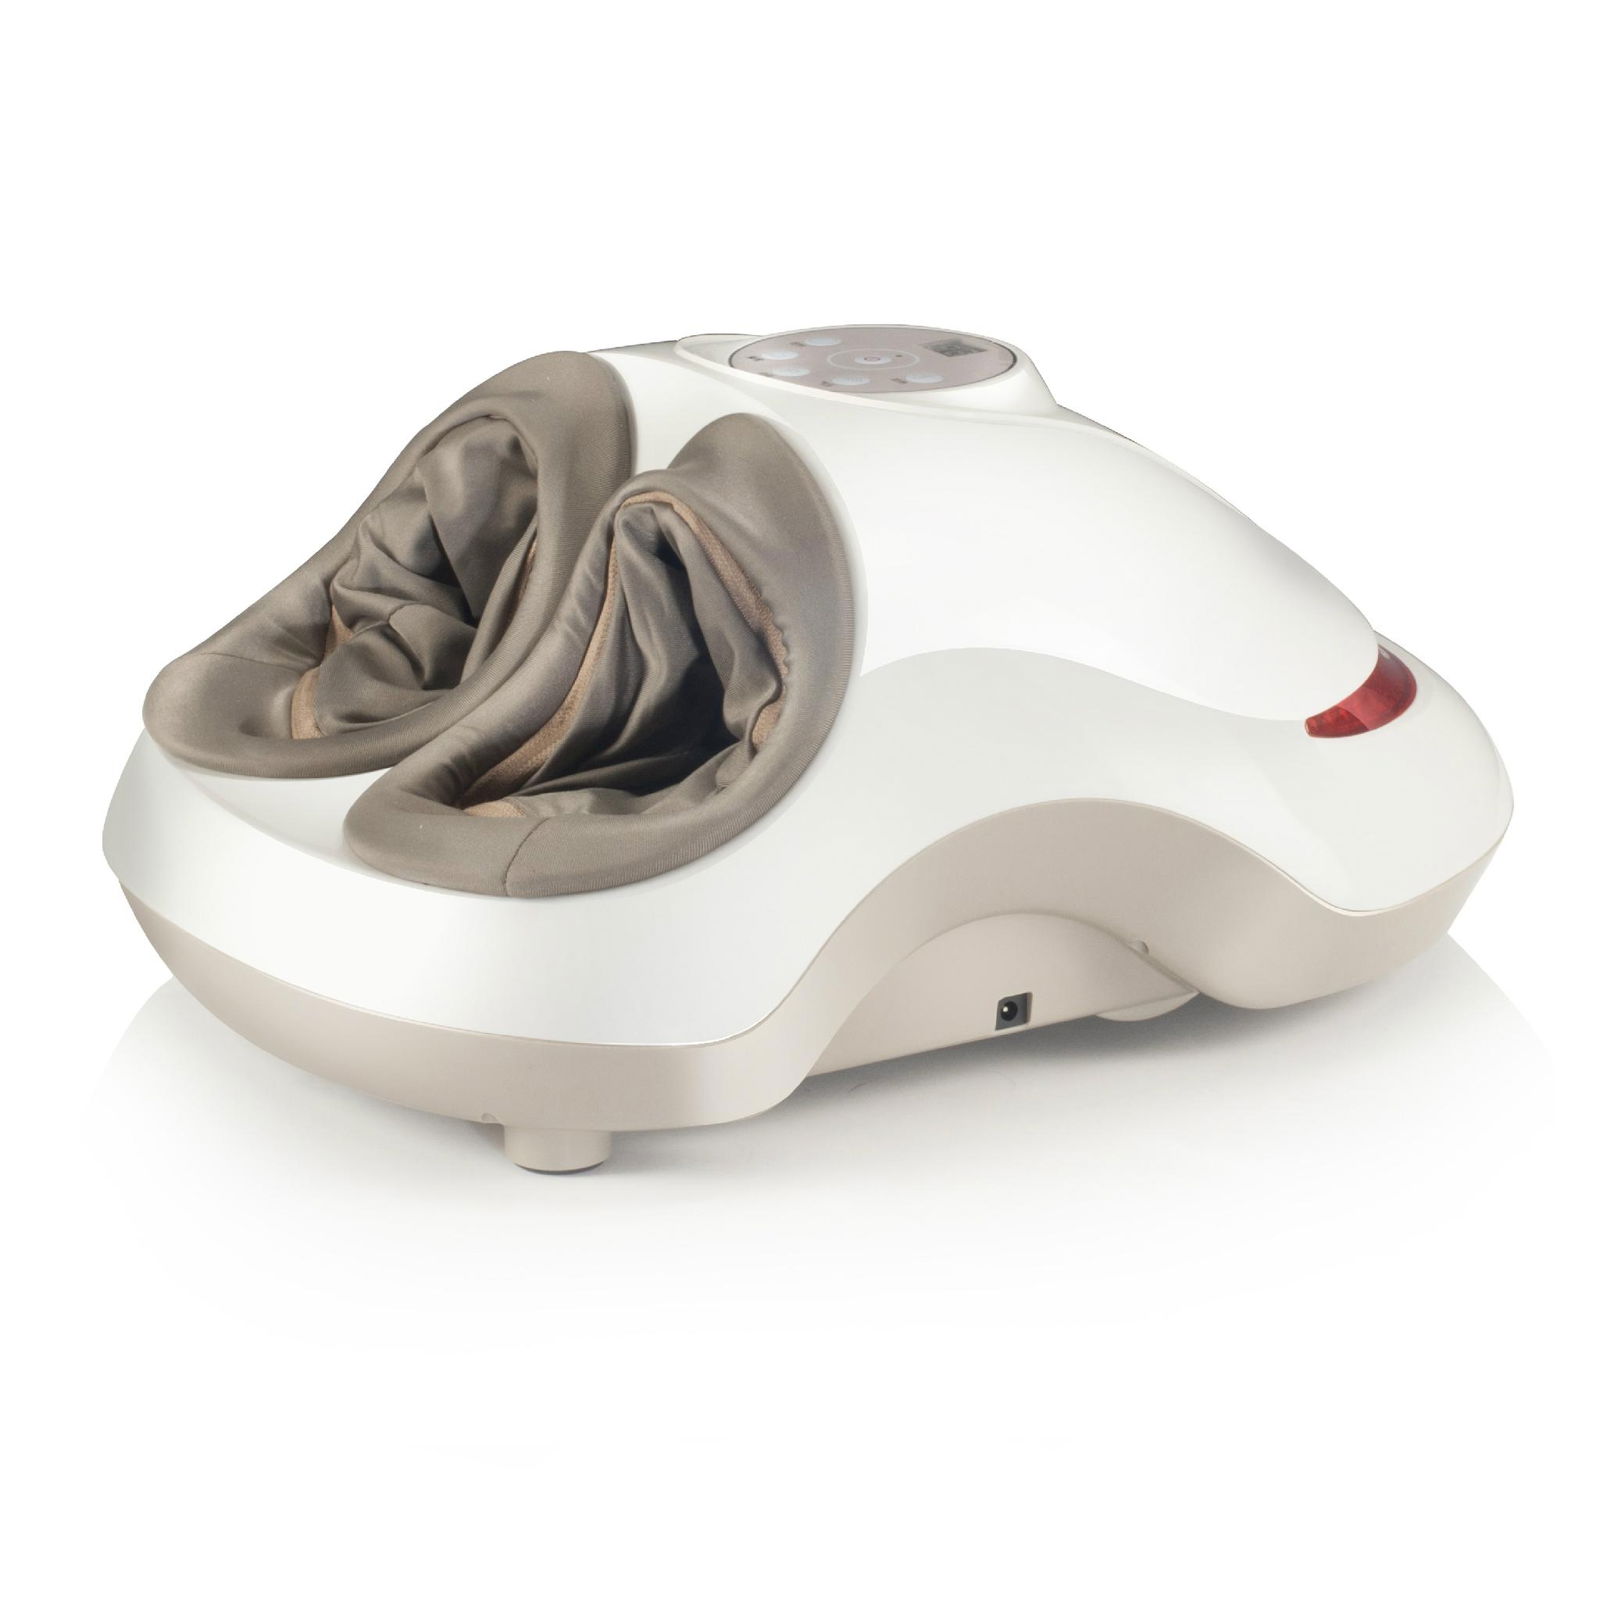 K818B shiatsu foot electrical massage apparatus with kneading 4